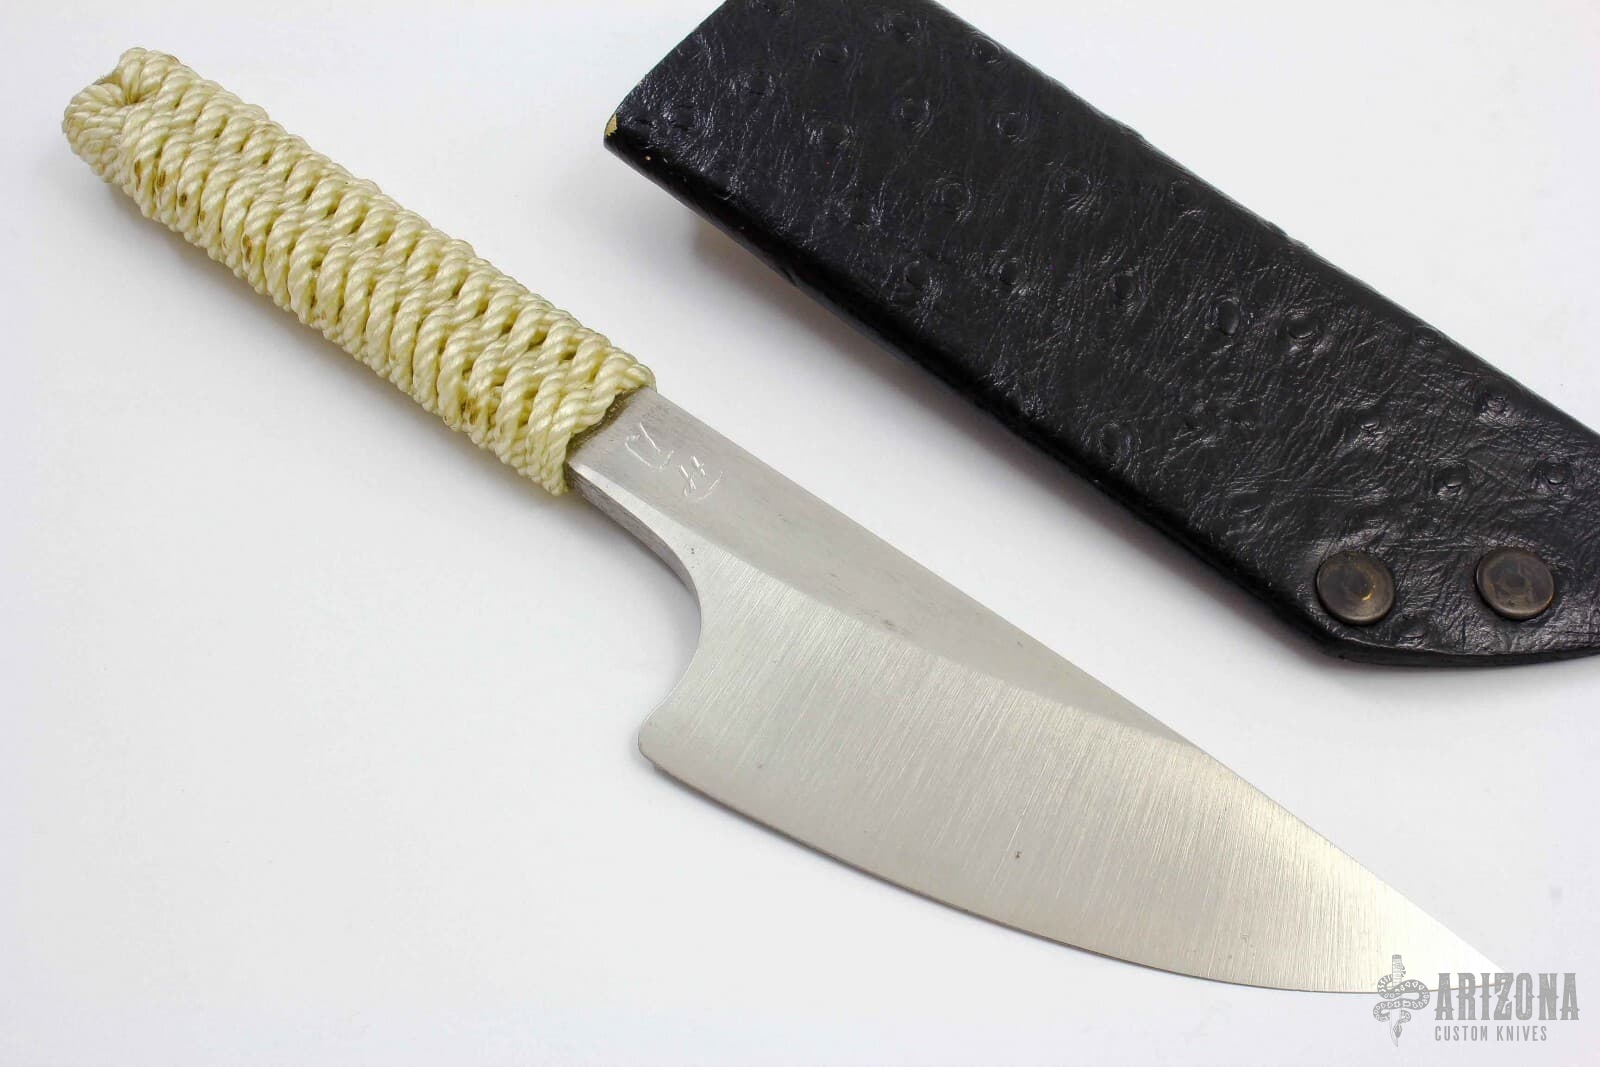 Large File Knife  Arizona Custom Knives